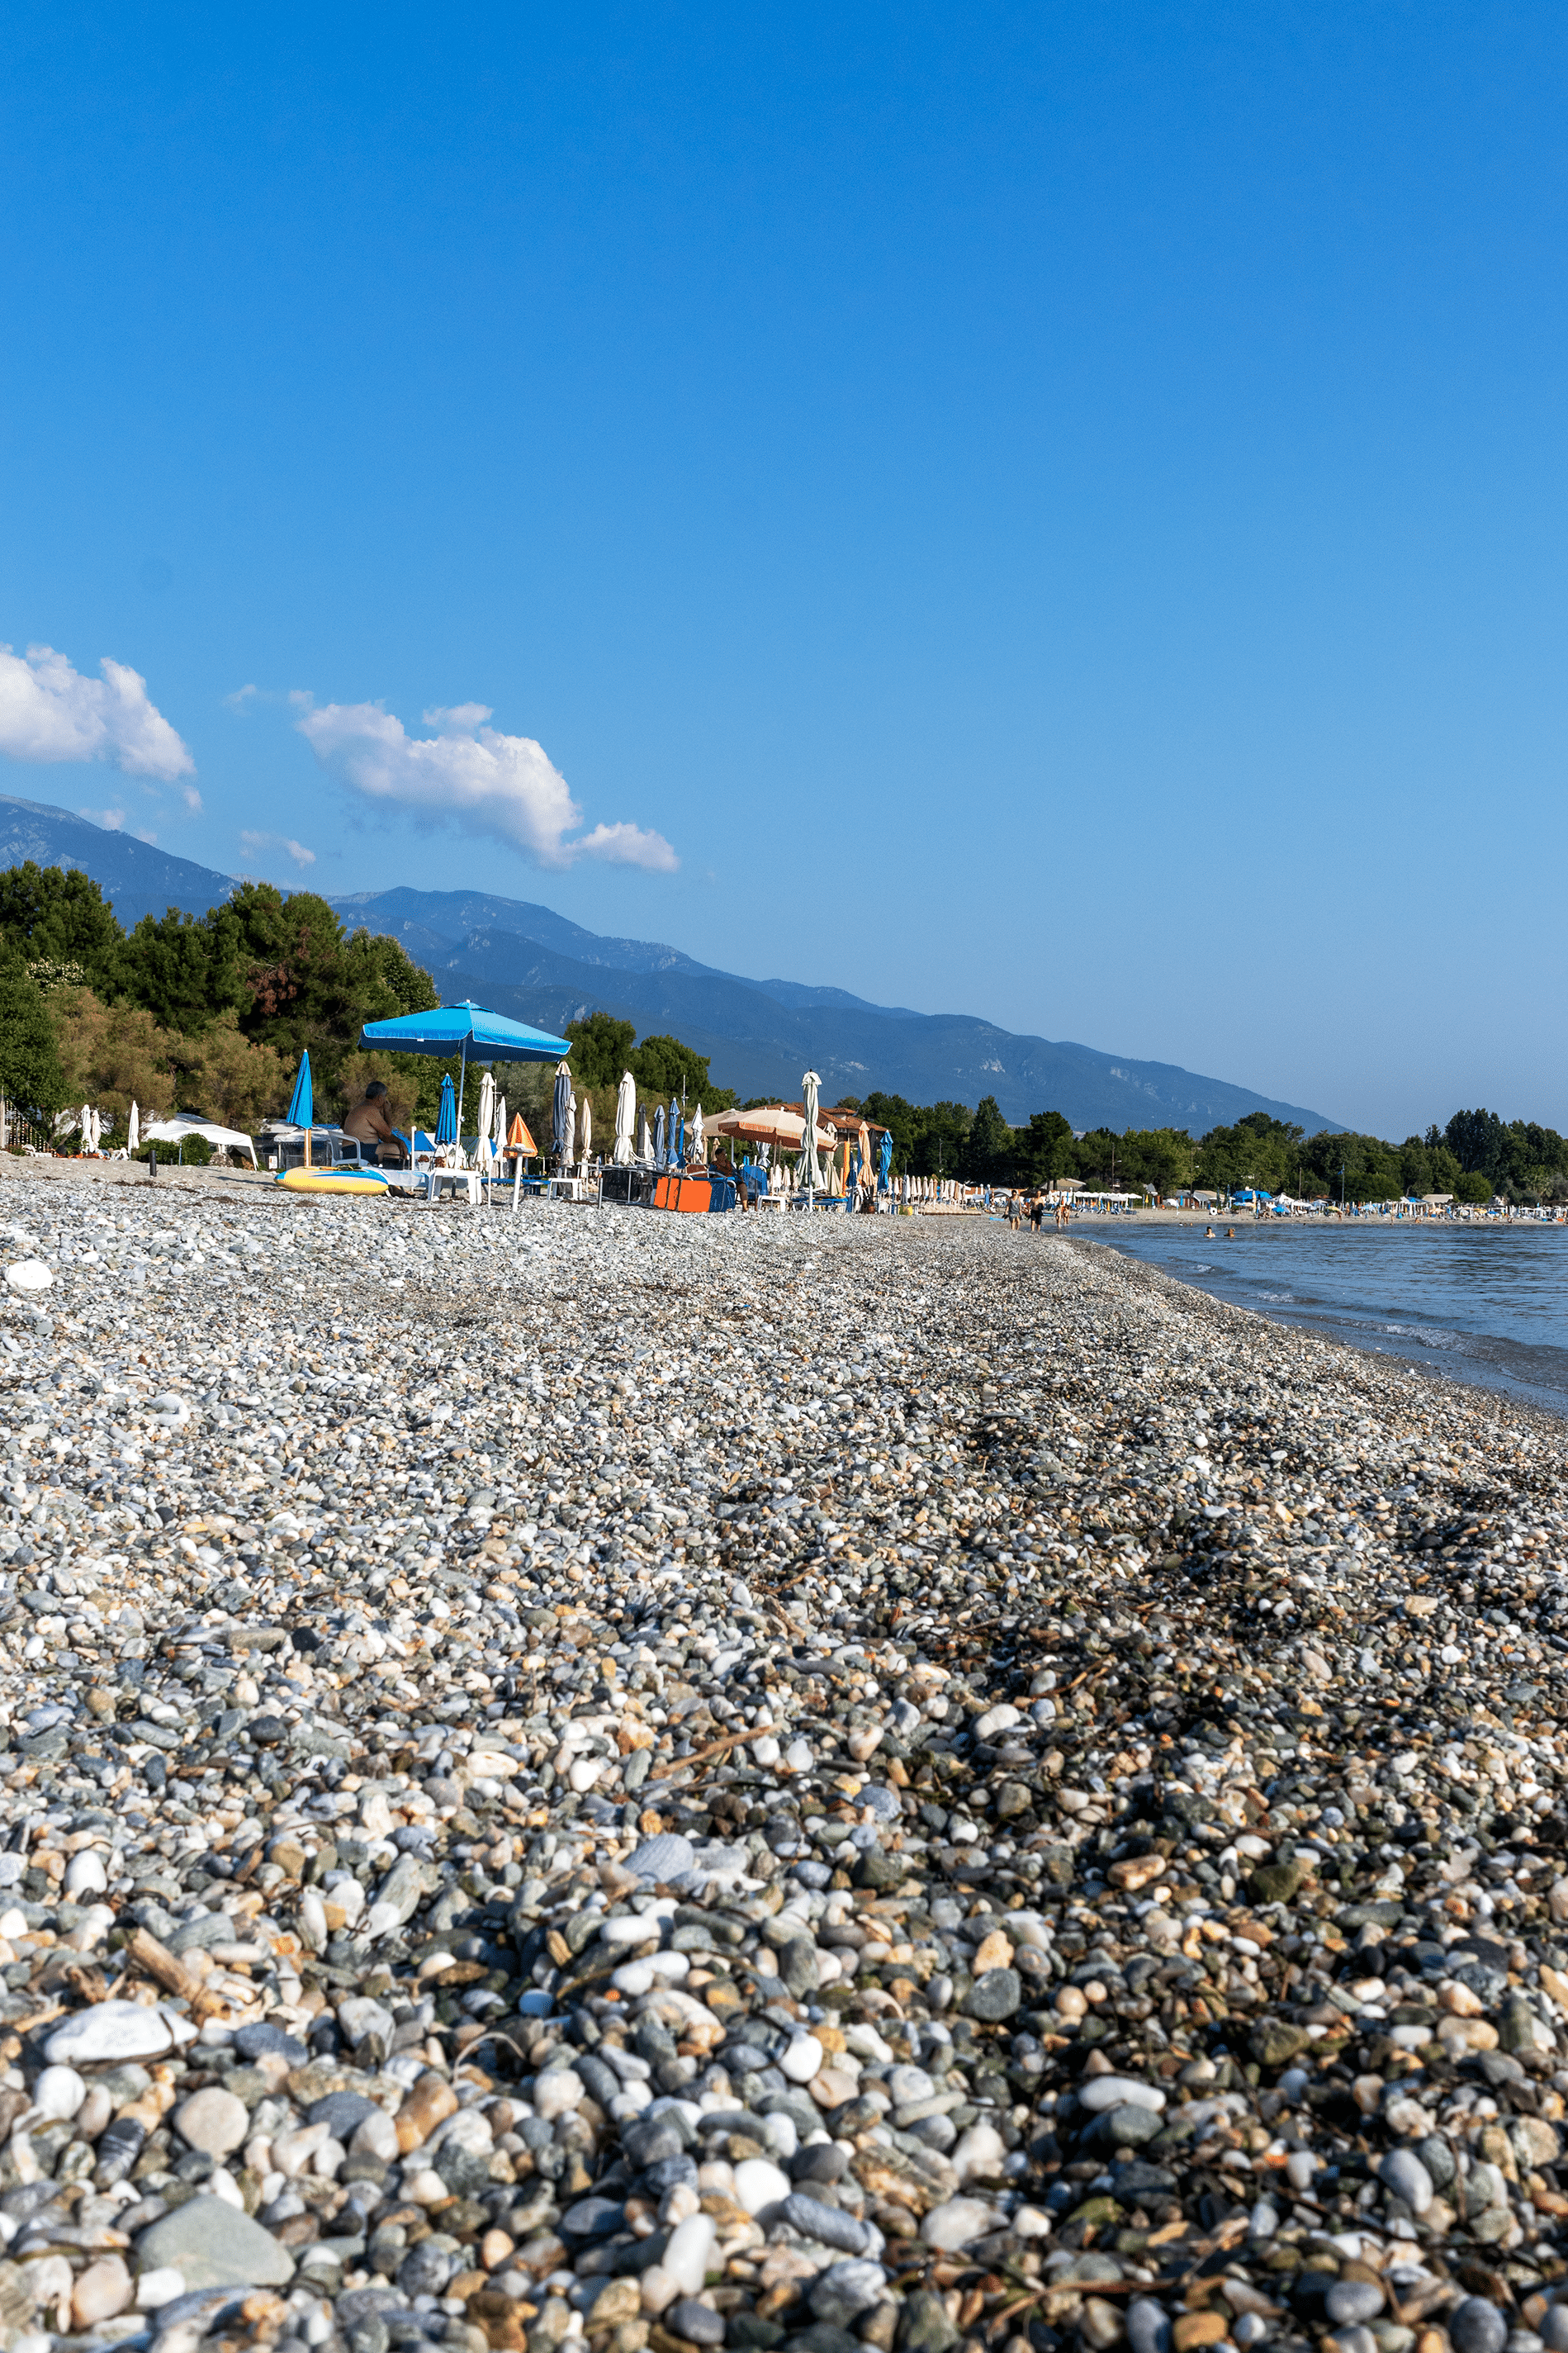 Sunbeds and closed umbrellas Infront of the Beach on the pebbles of Pnateleimon Beach, Pieria region, Greece.